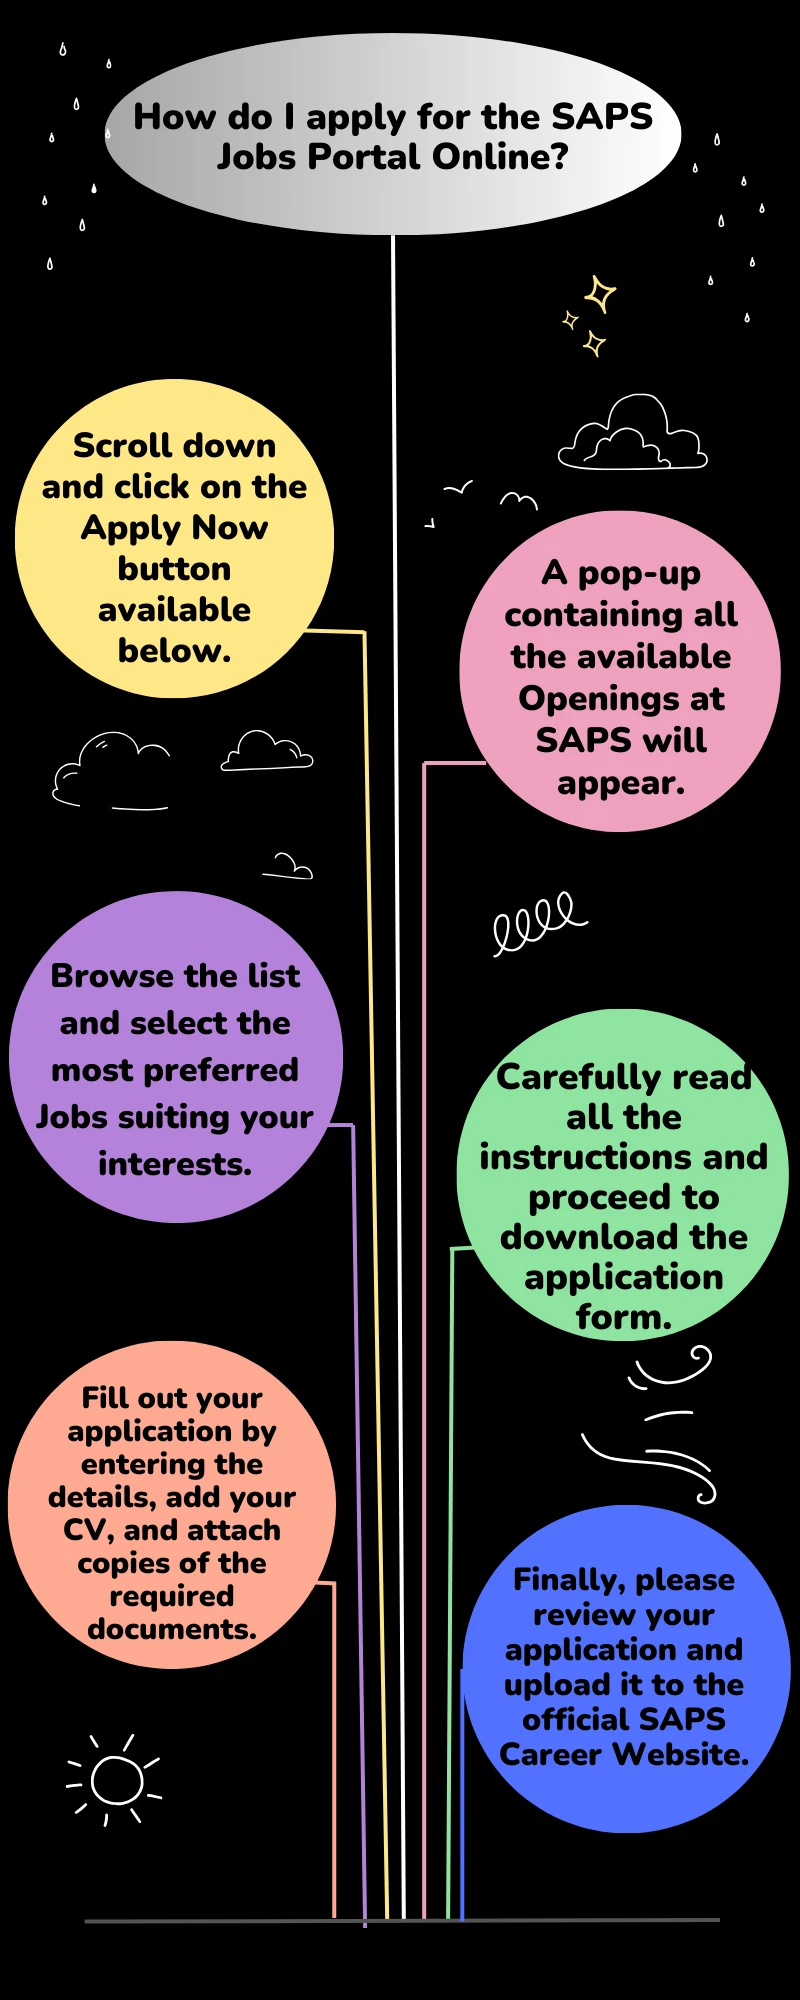 How do I apply for the SAPS Jobs Portal Online?